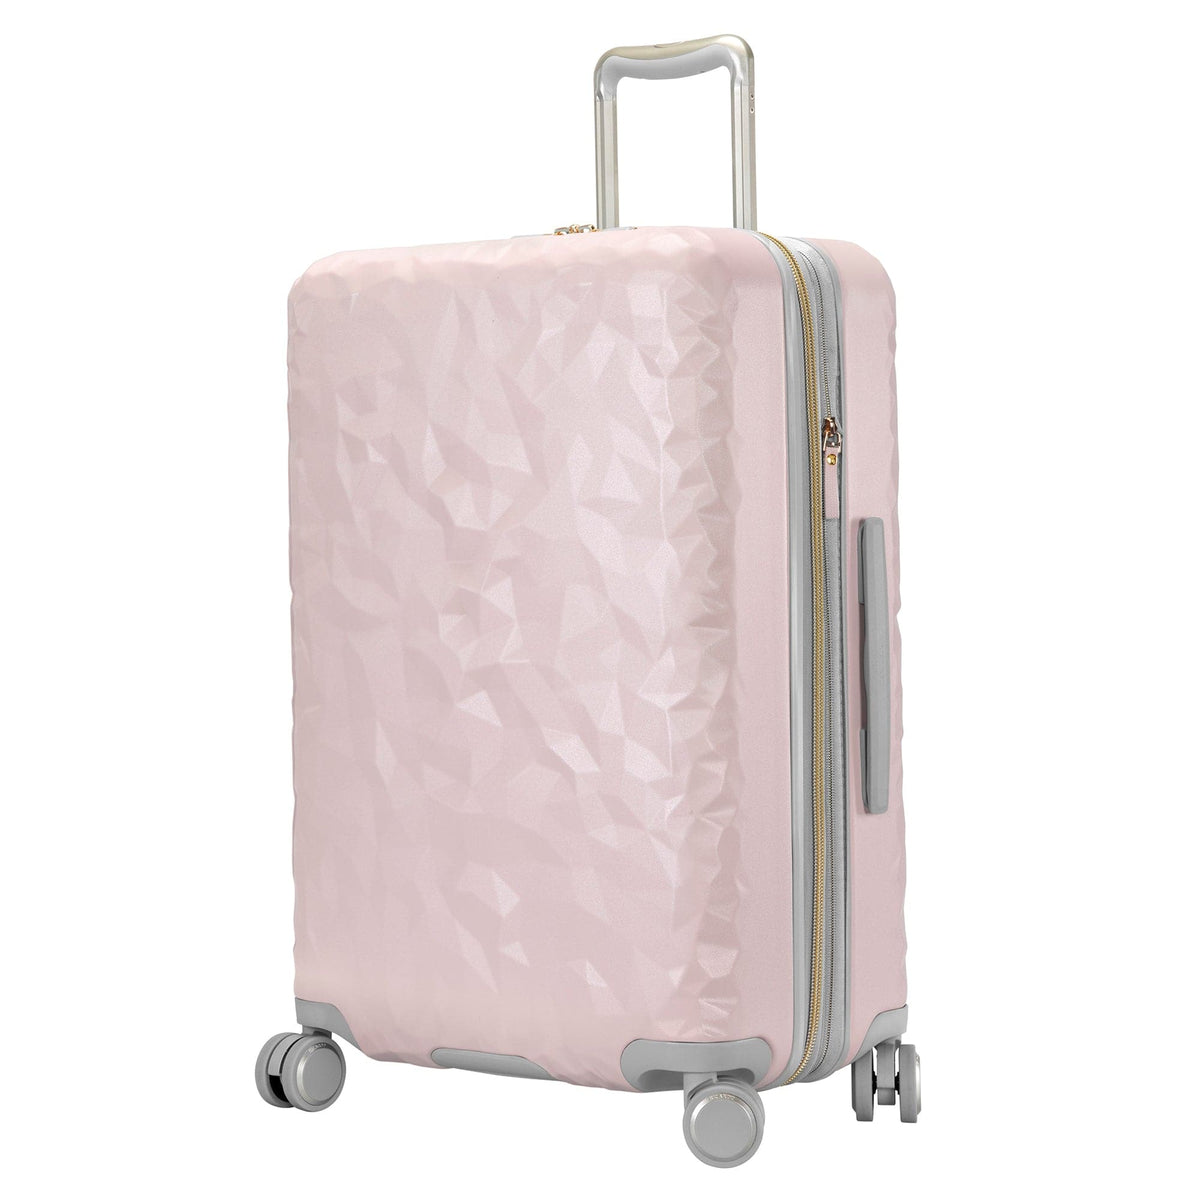 Ricardo Beverly Hills Indio Medium Check-In Suitcase Luggage